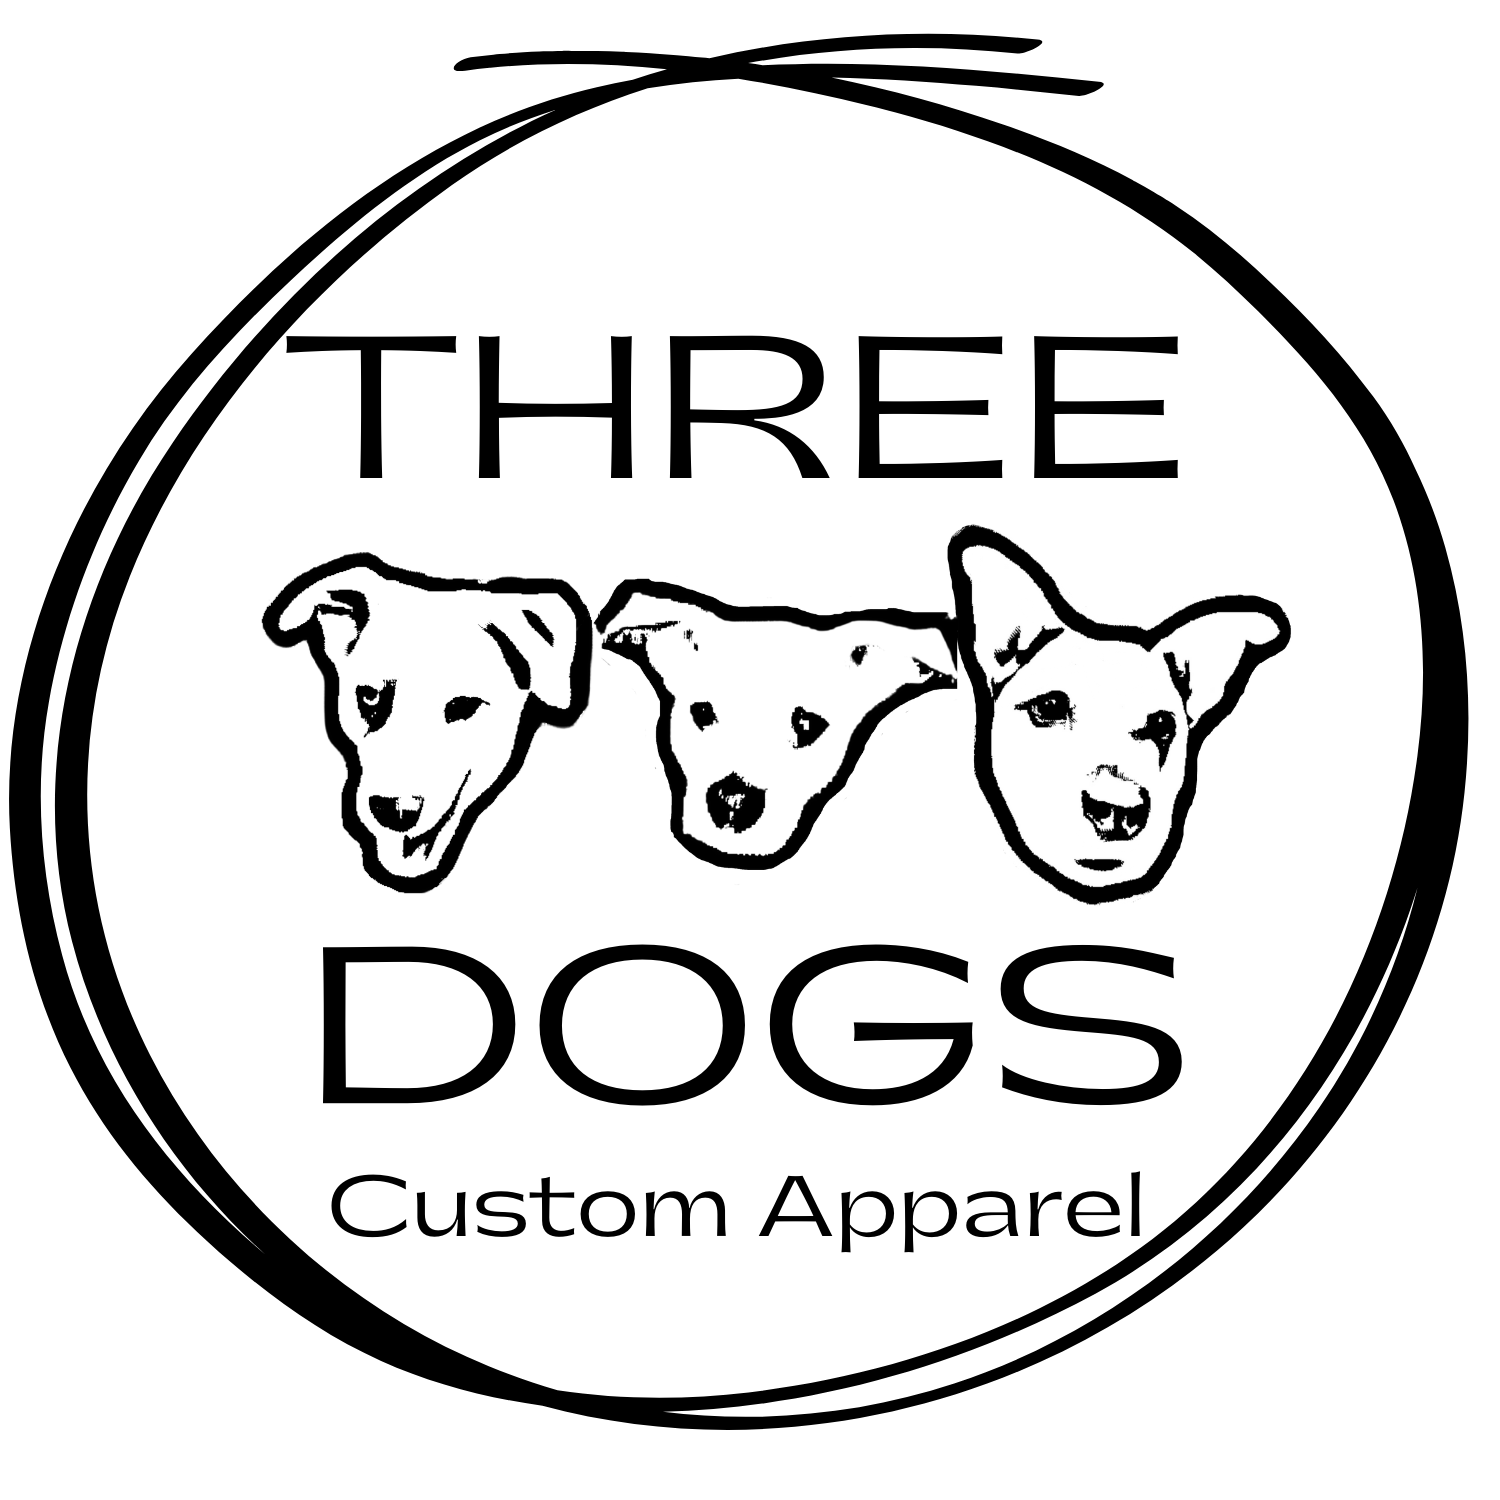 Three Dogs Custom Apparel